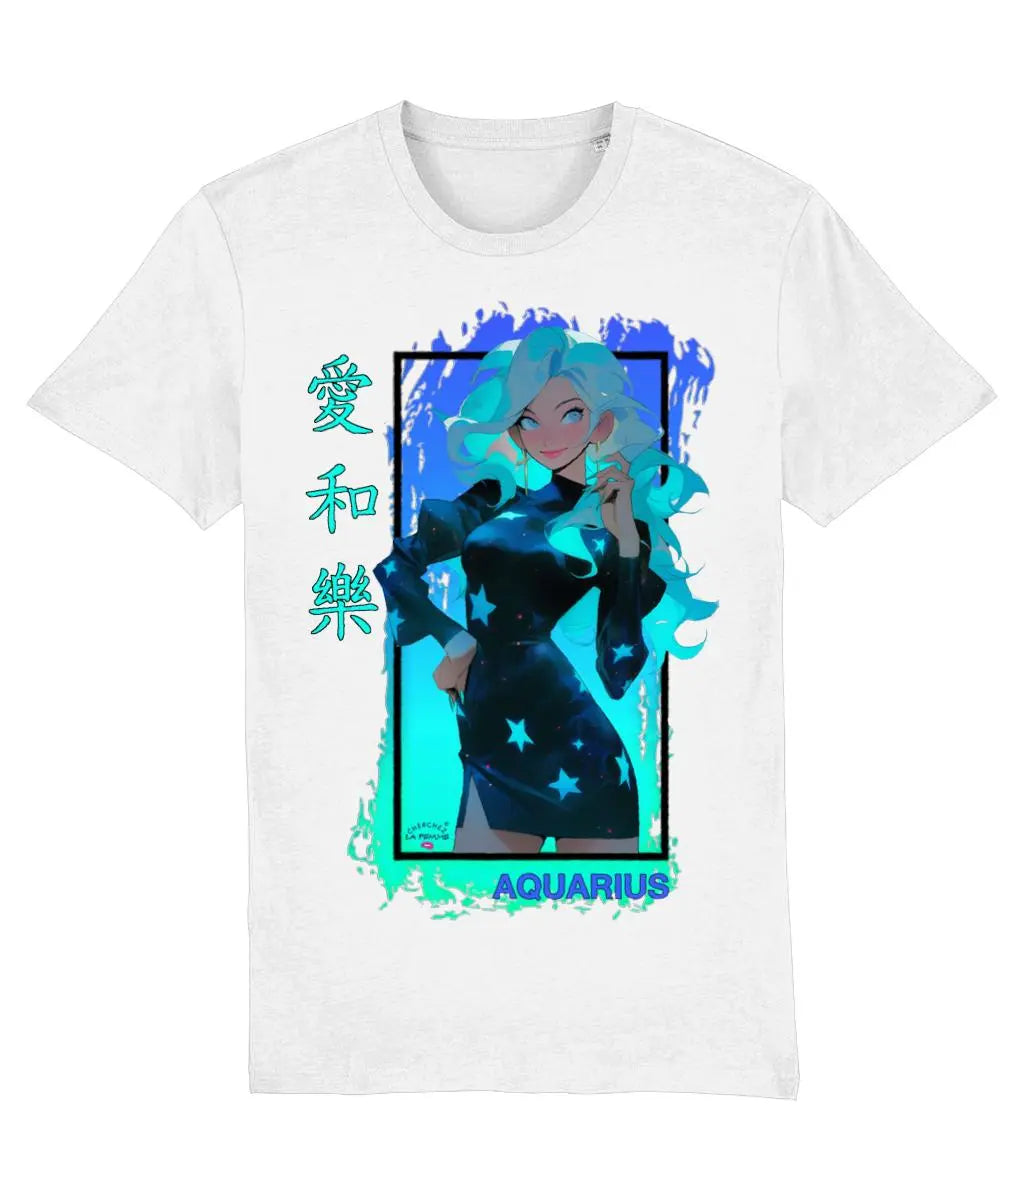 Aquarius Anime Inspired Organic T-Shirt Cherchez La Femme brand